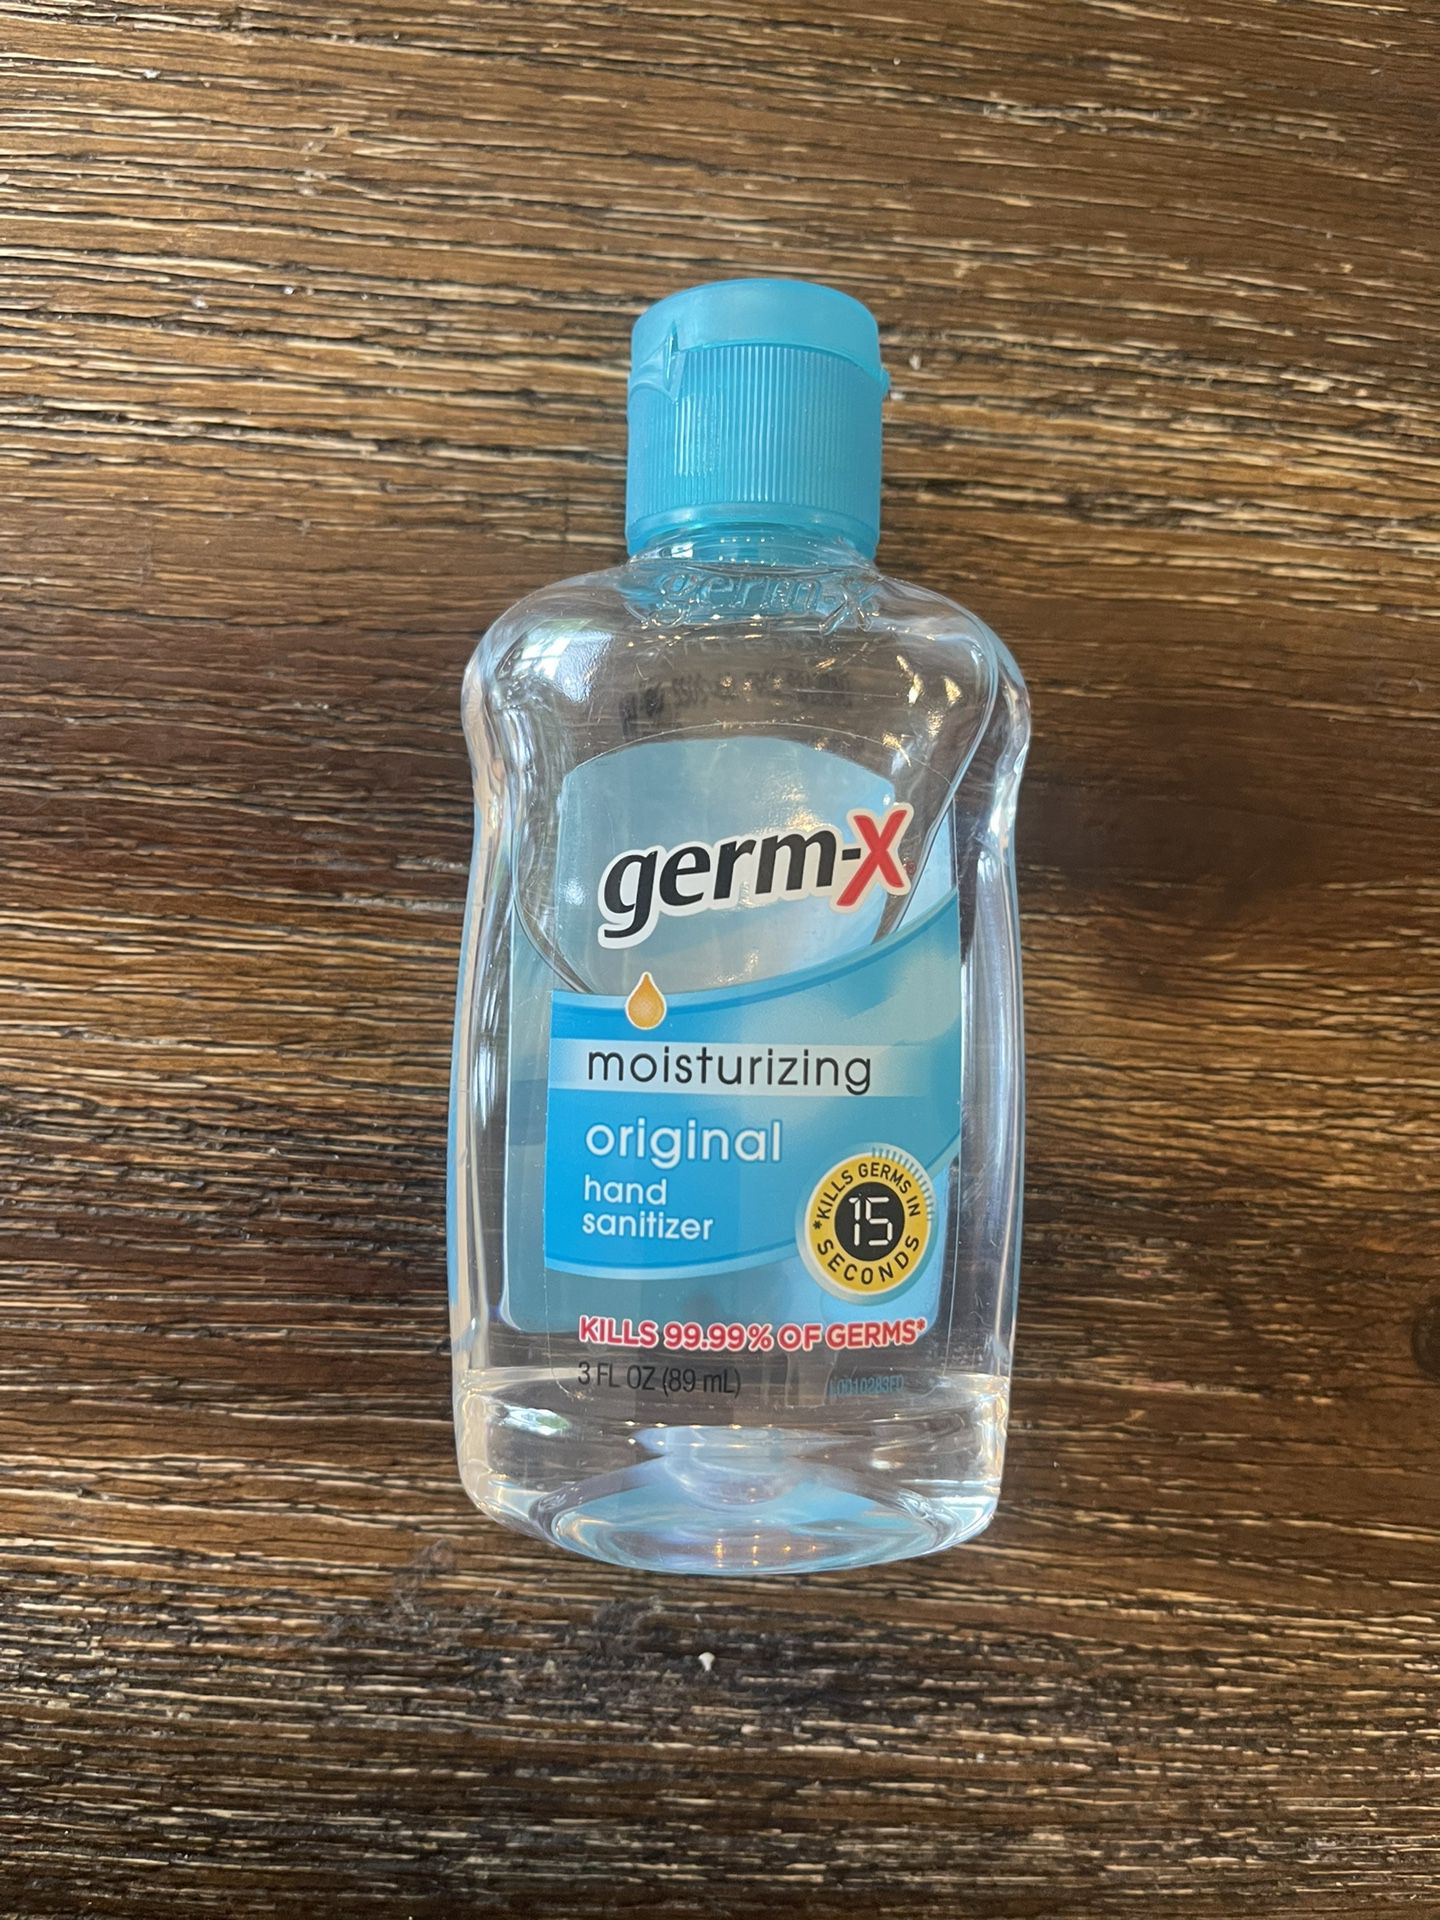 Germ-X Moisturizing Original 3oz Travel Size Hand Sanitizer 